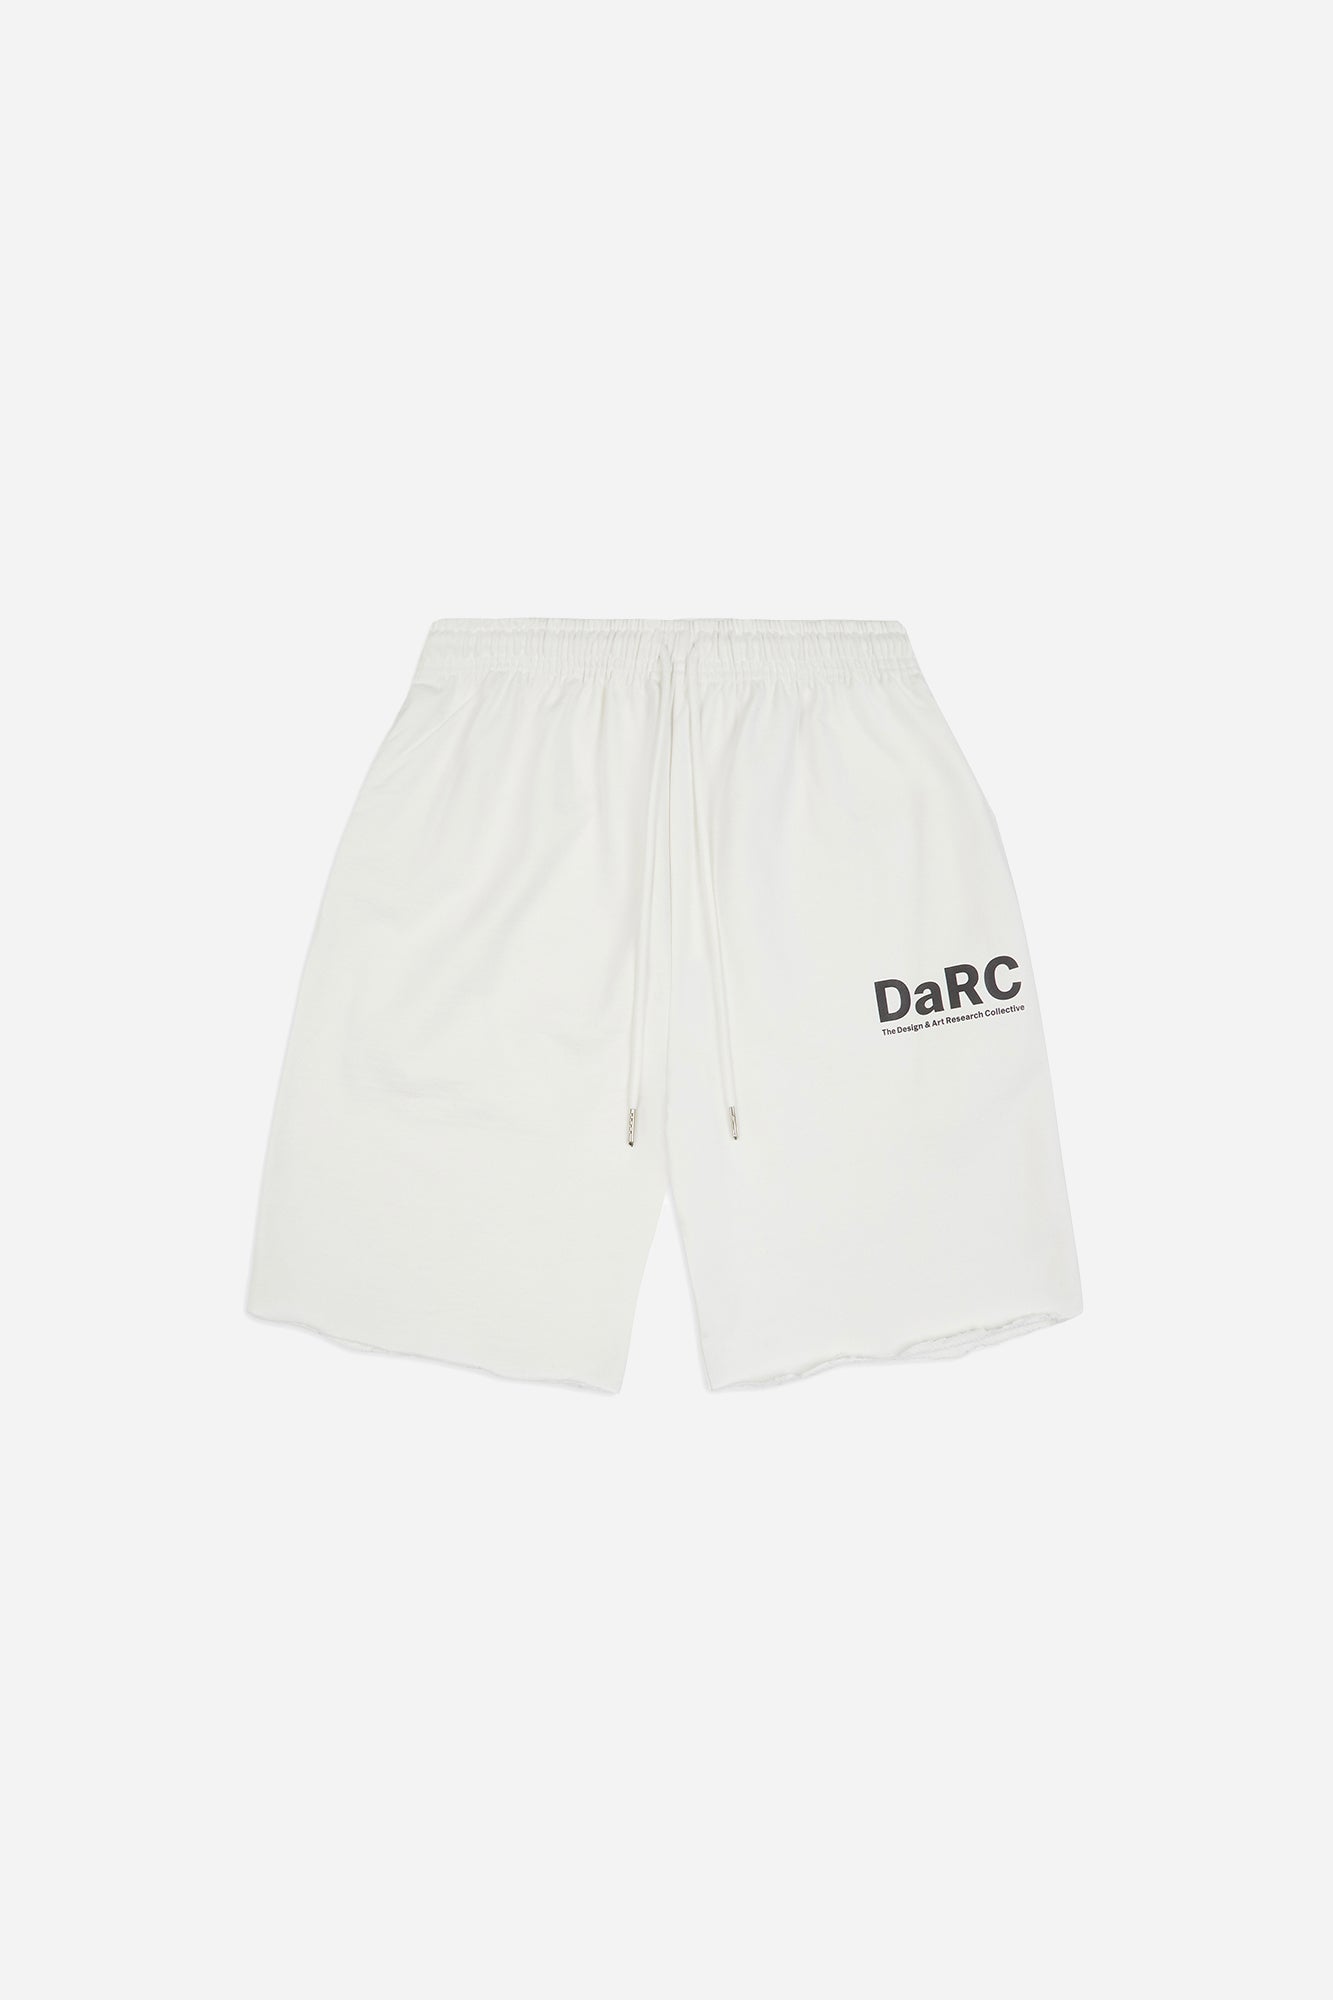 DaRC Shorts - Ivory